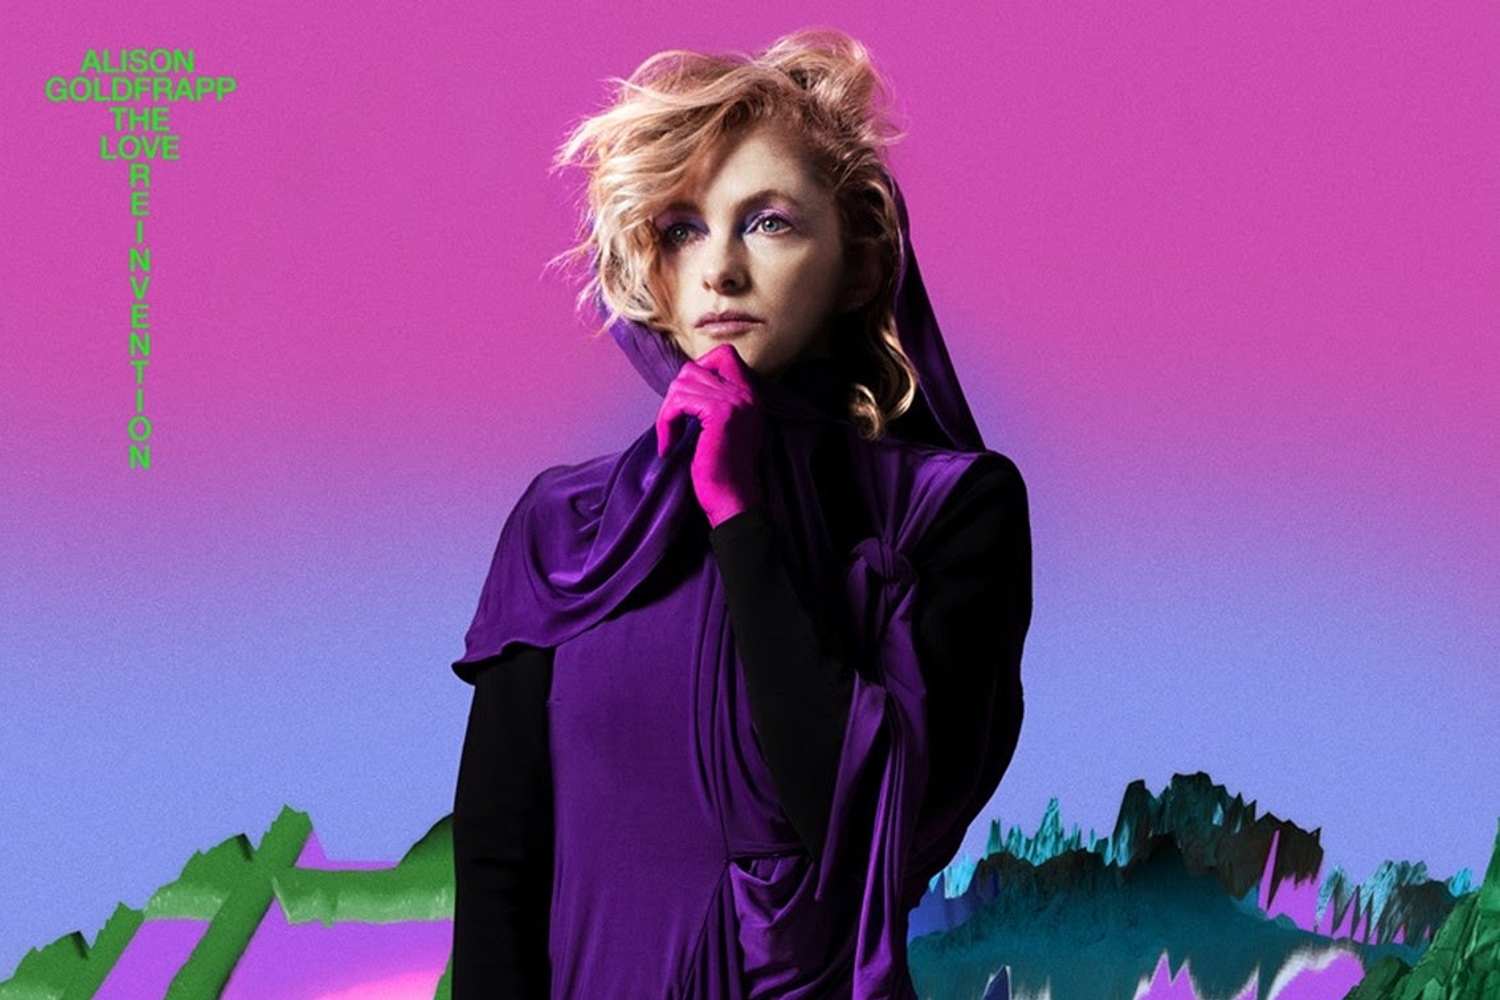 Alison Goldfrapp announces dancefloor remix album ‘The Love Reinvention’